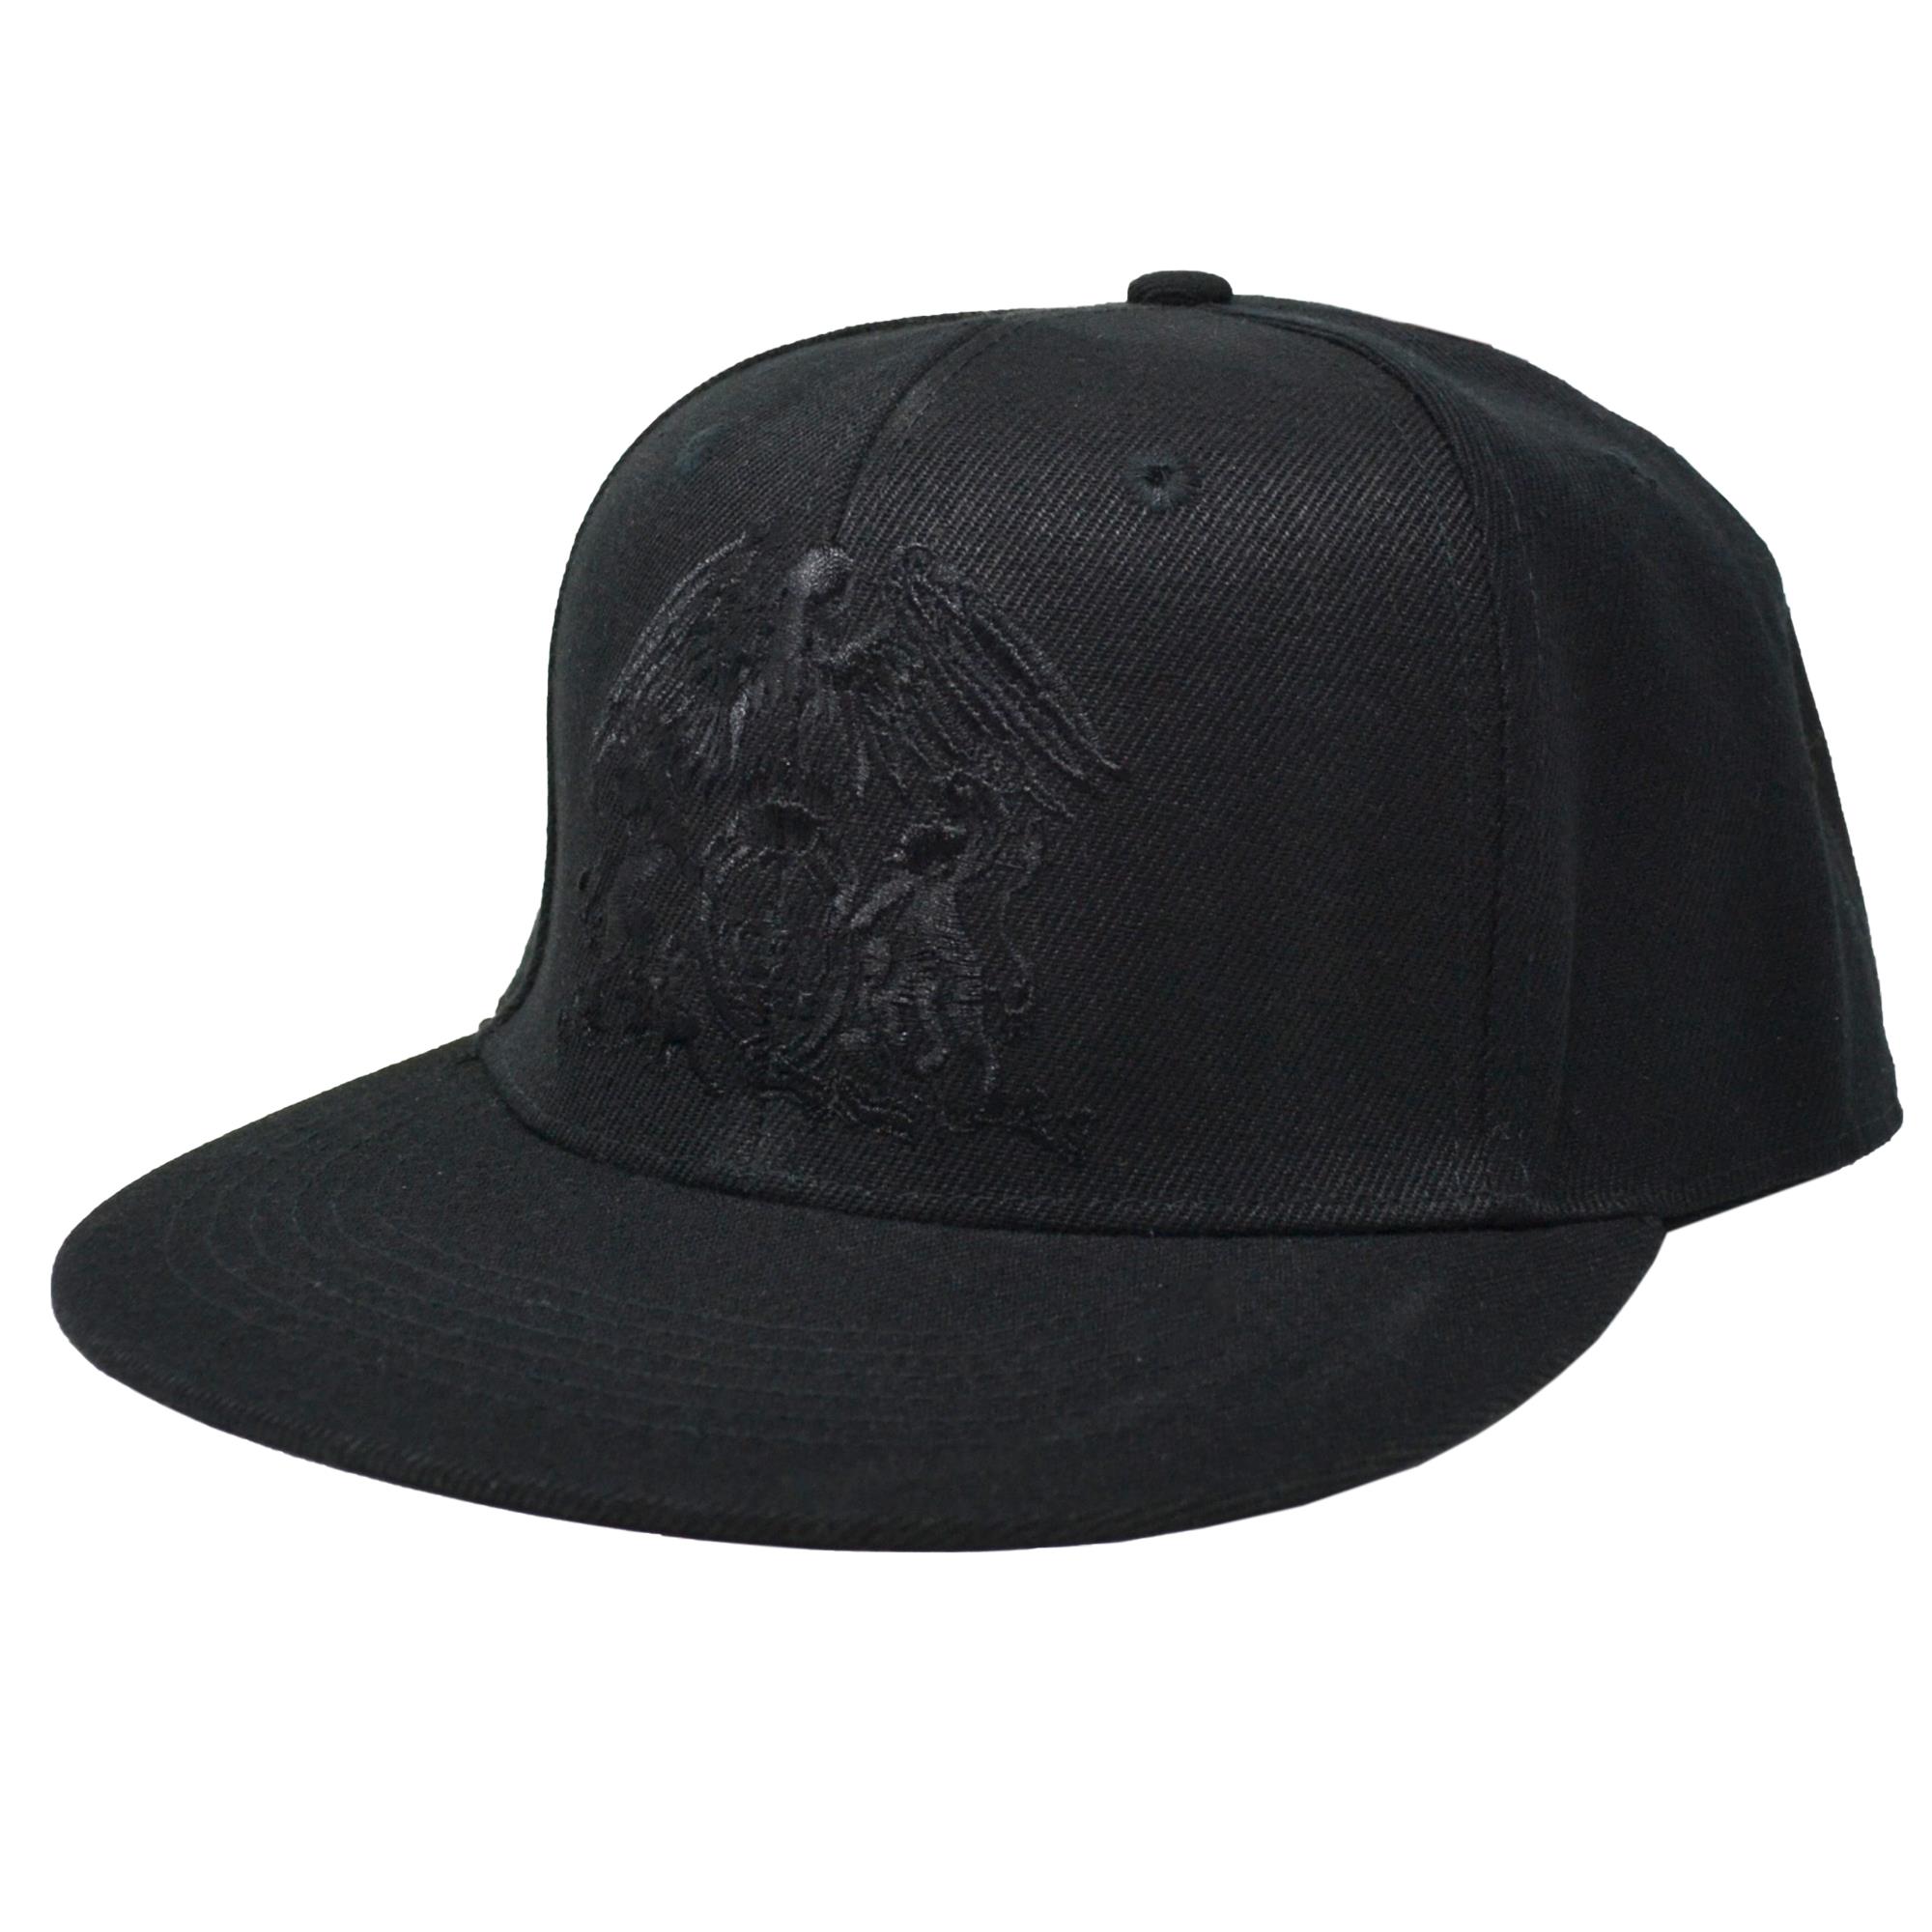 Black Crest Hat